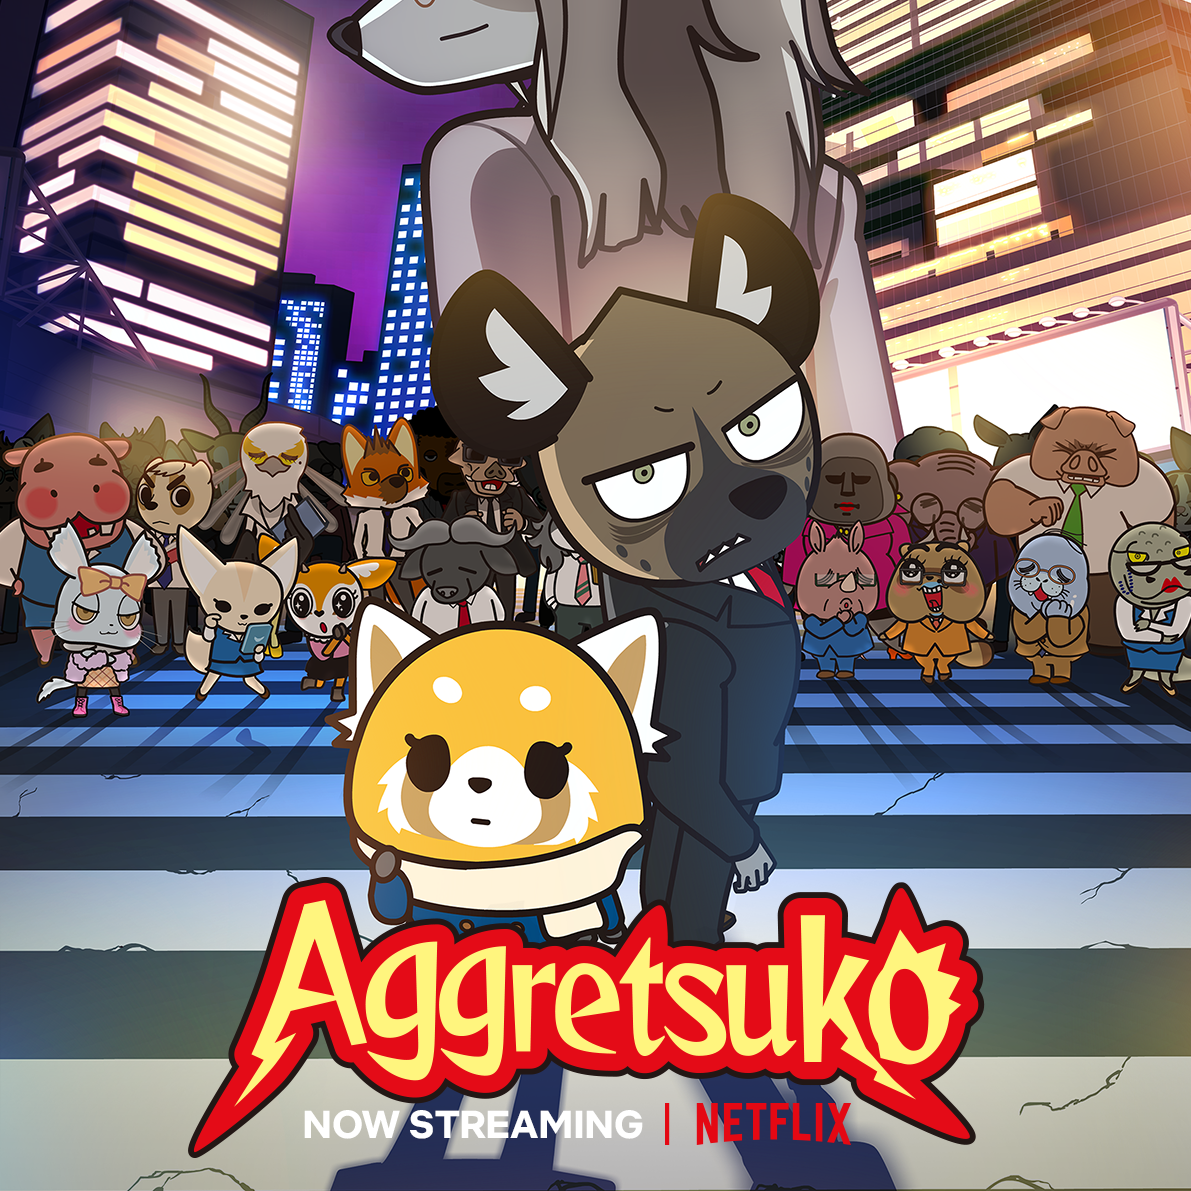 Raging into Aggretsuko Season 4